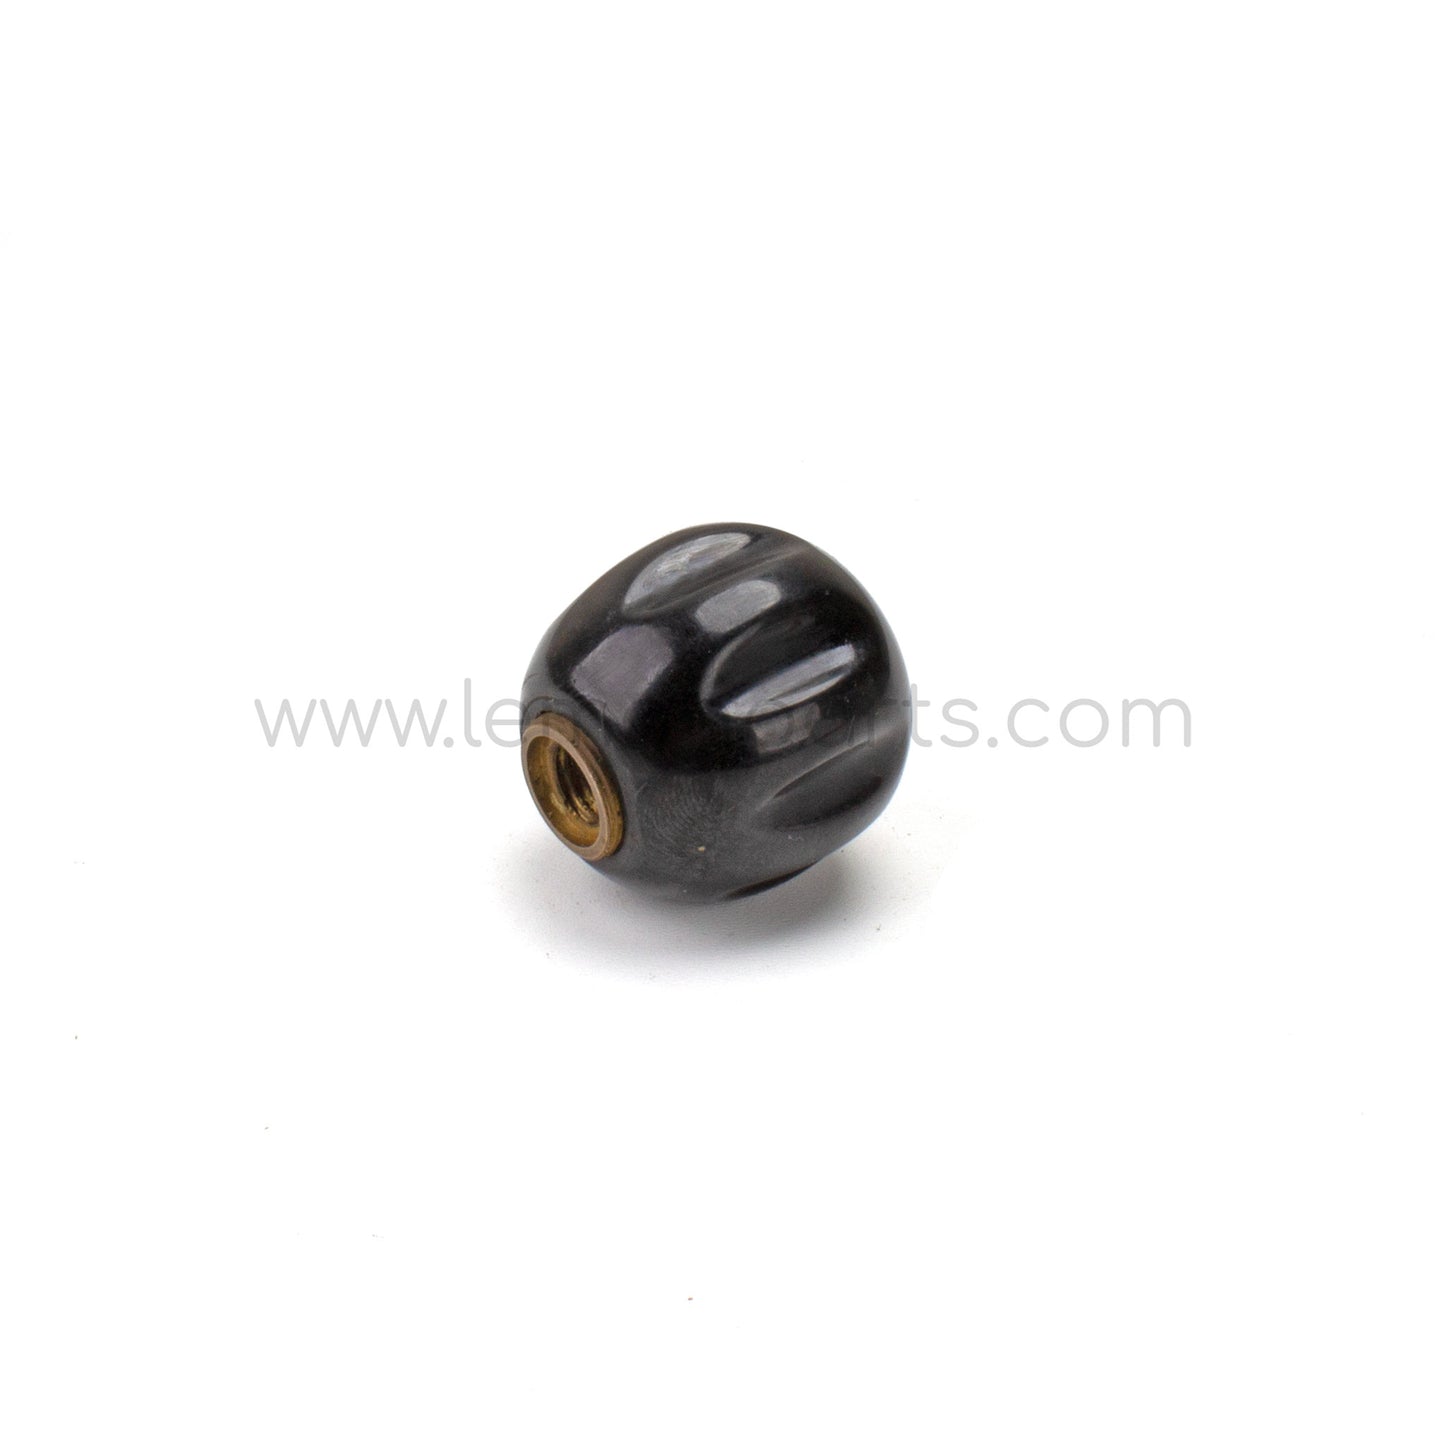 Original black gear knob for Ferrari 250 / 330